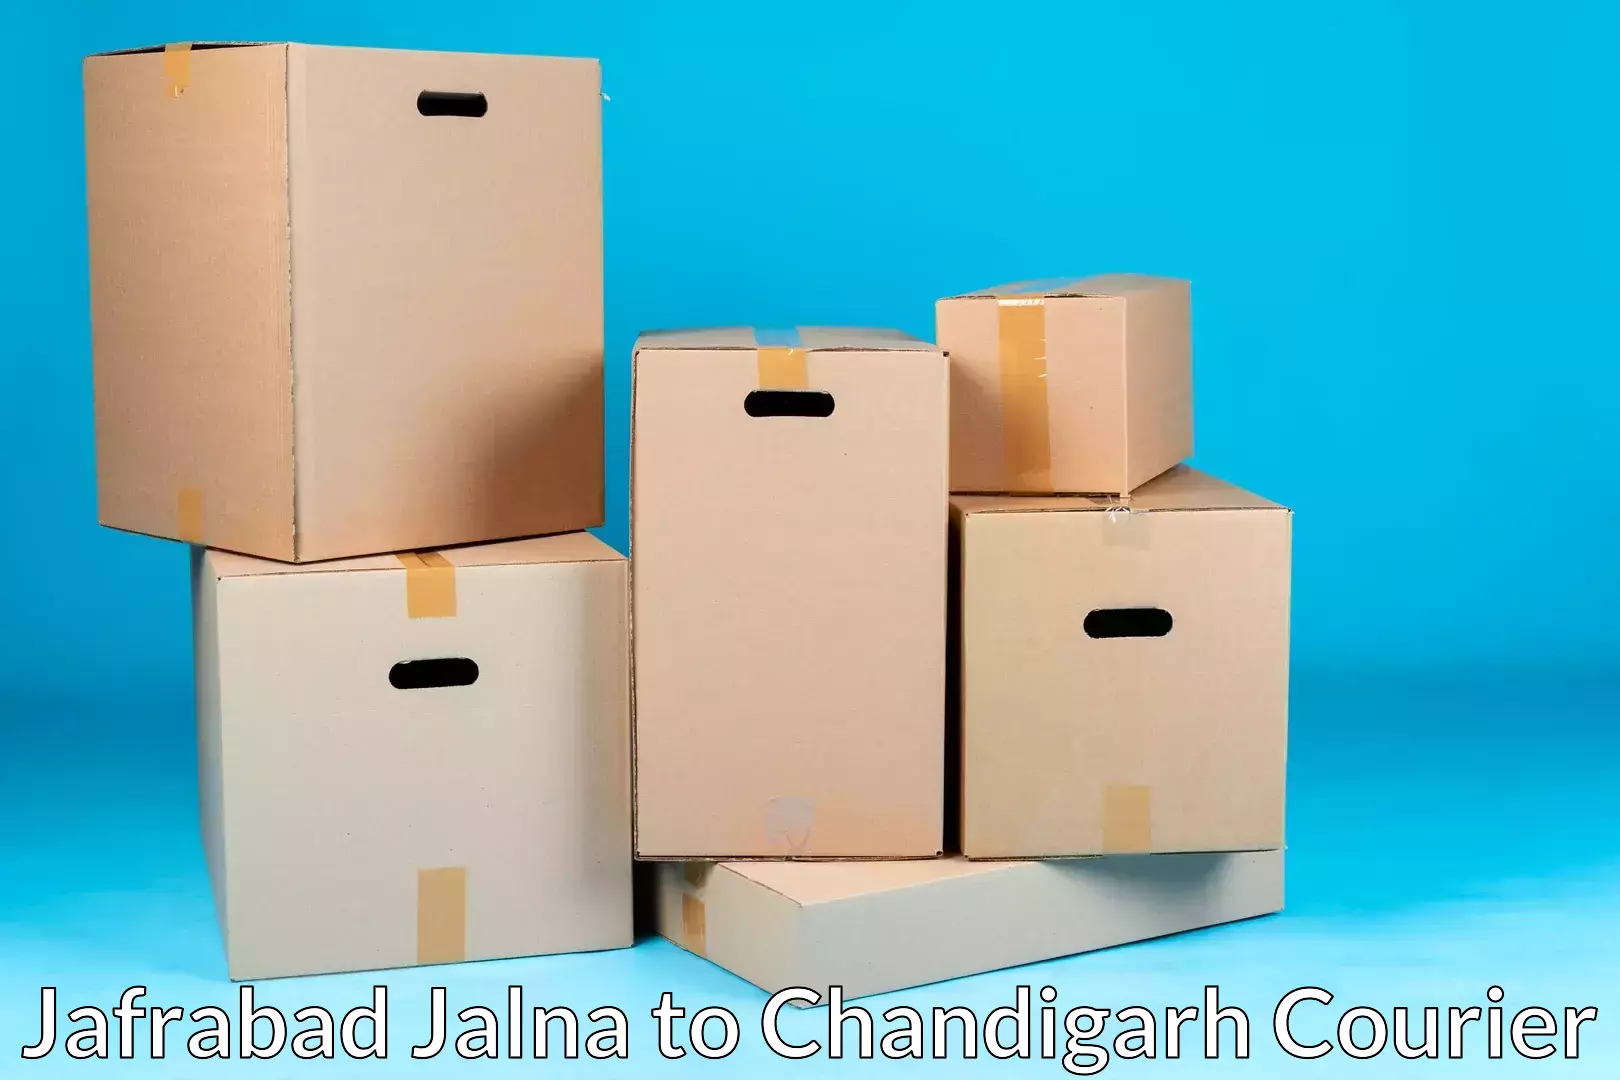 Professional moving company Jafrabad Jalna to Chandigarh